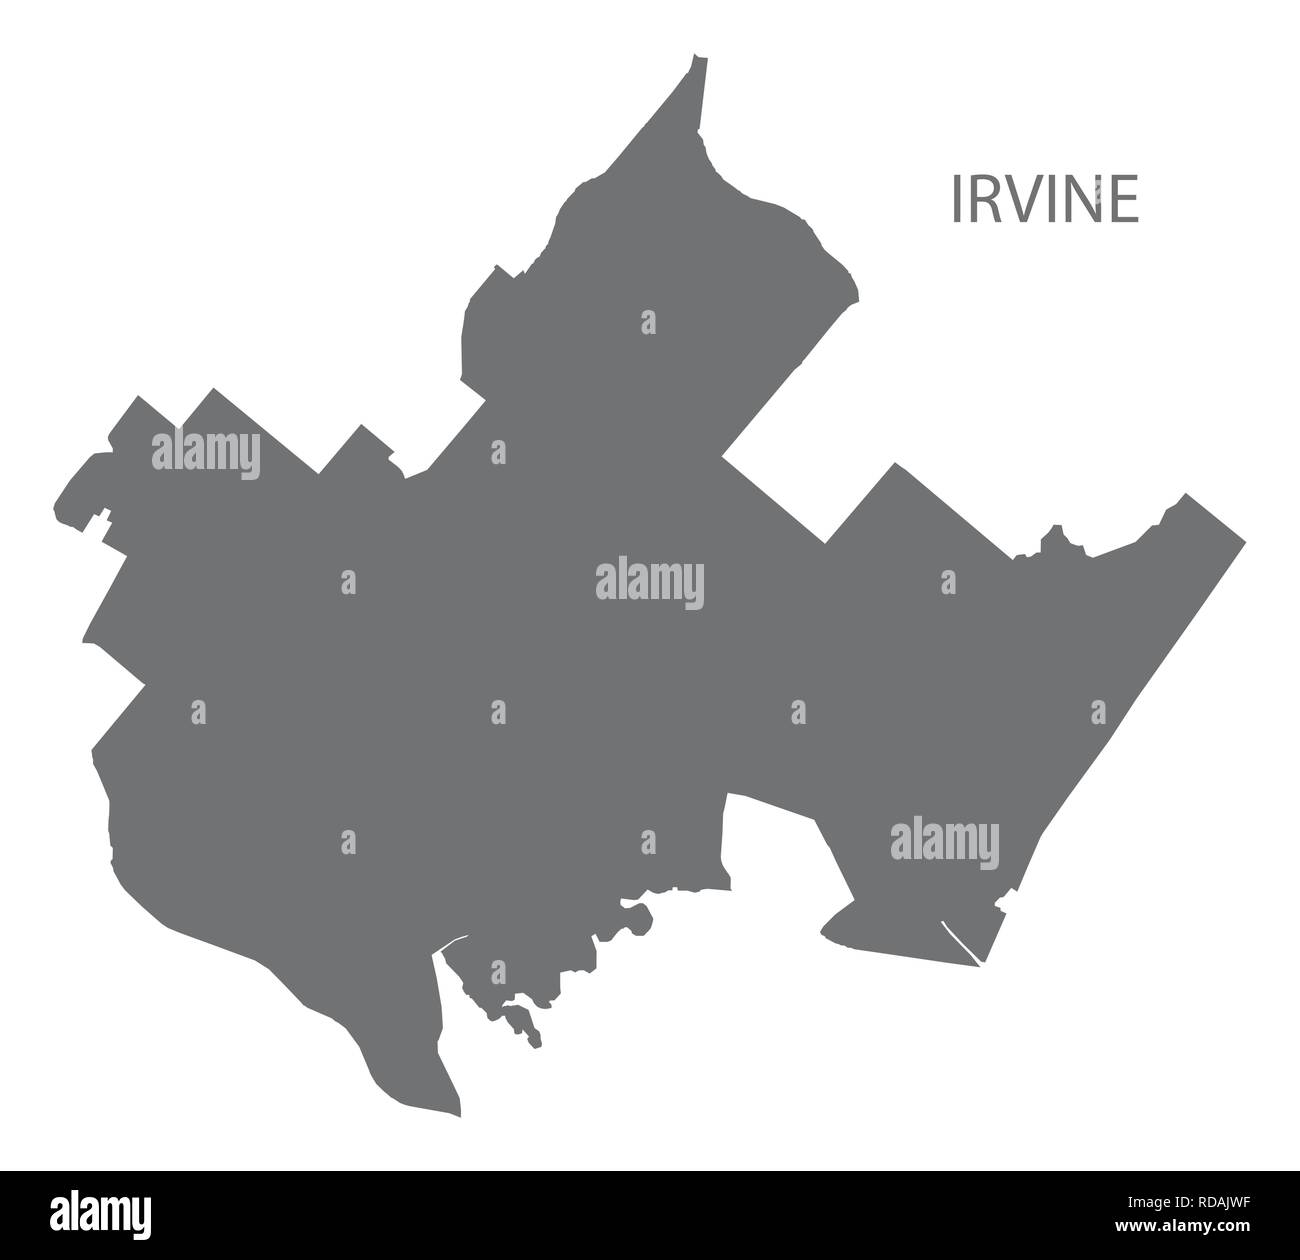 Irvine California city map grey illustration silhouette shape Stock Vector